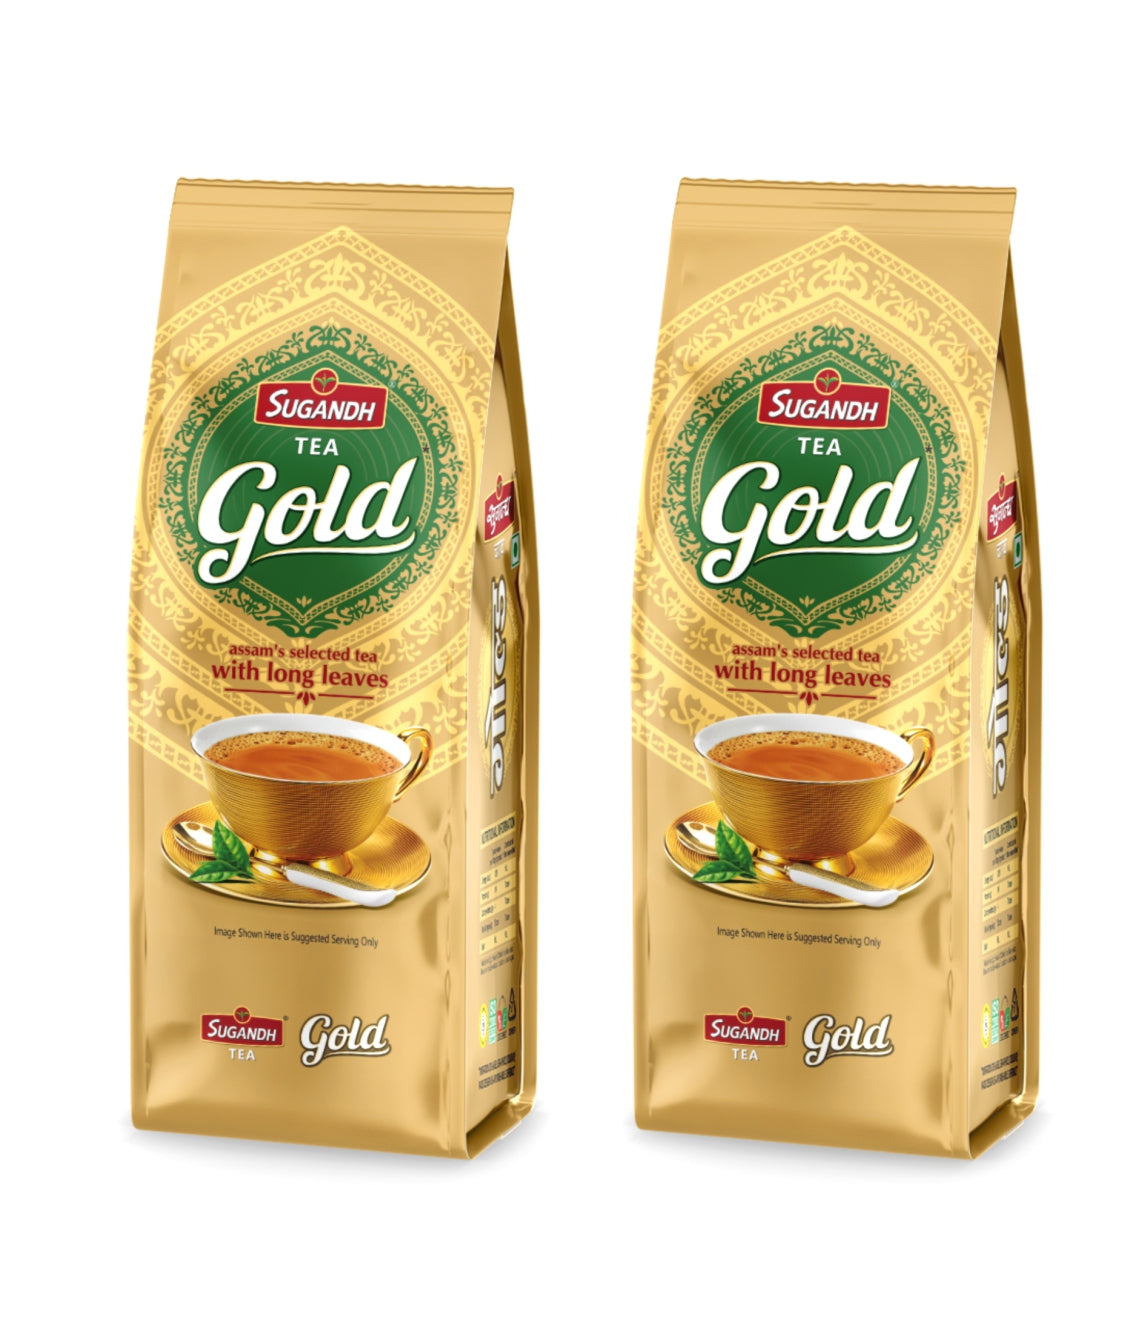 Sugandh Tea Gold 500g (Pack of 2 x 250g Each)